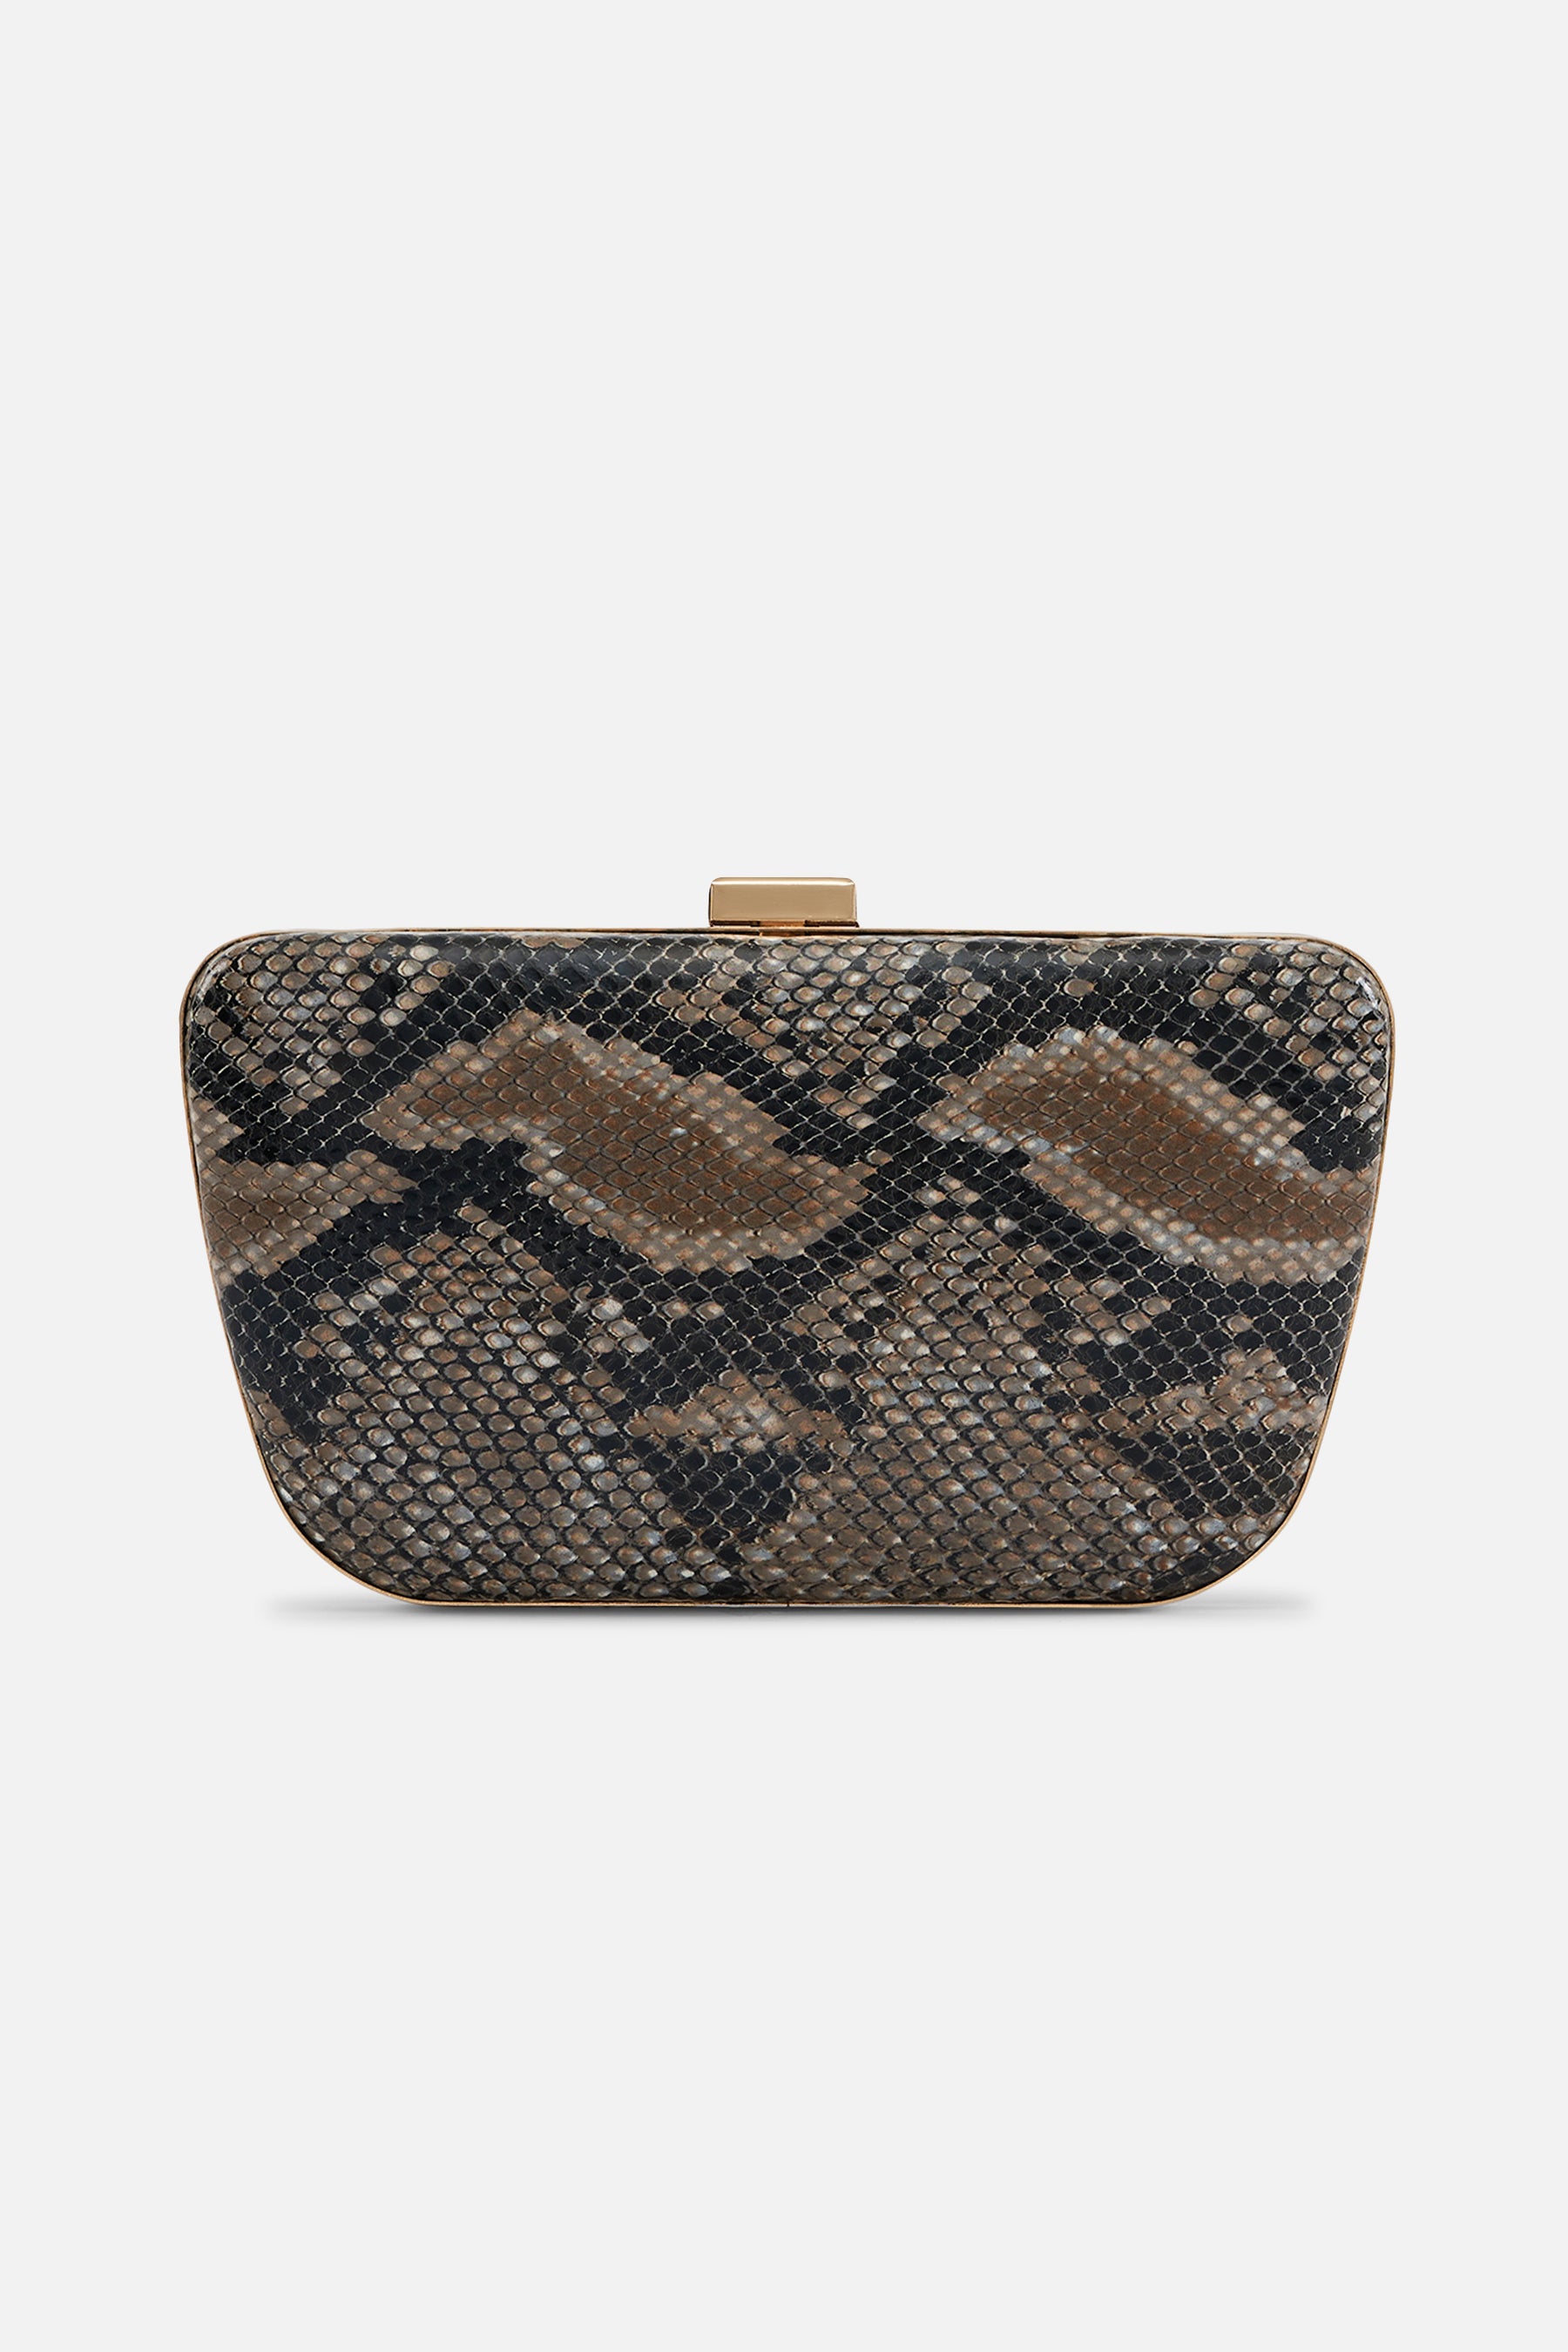 Camila - Leather Box Clutch Bag - Black Python Print